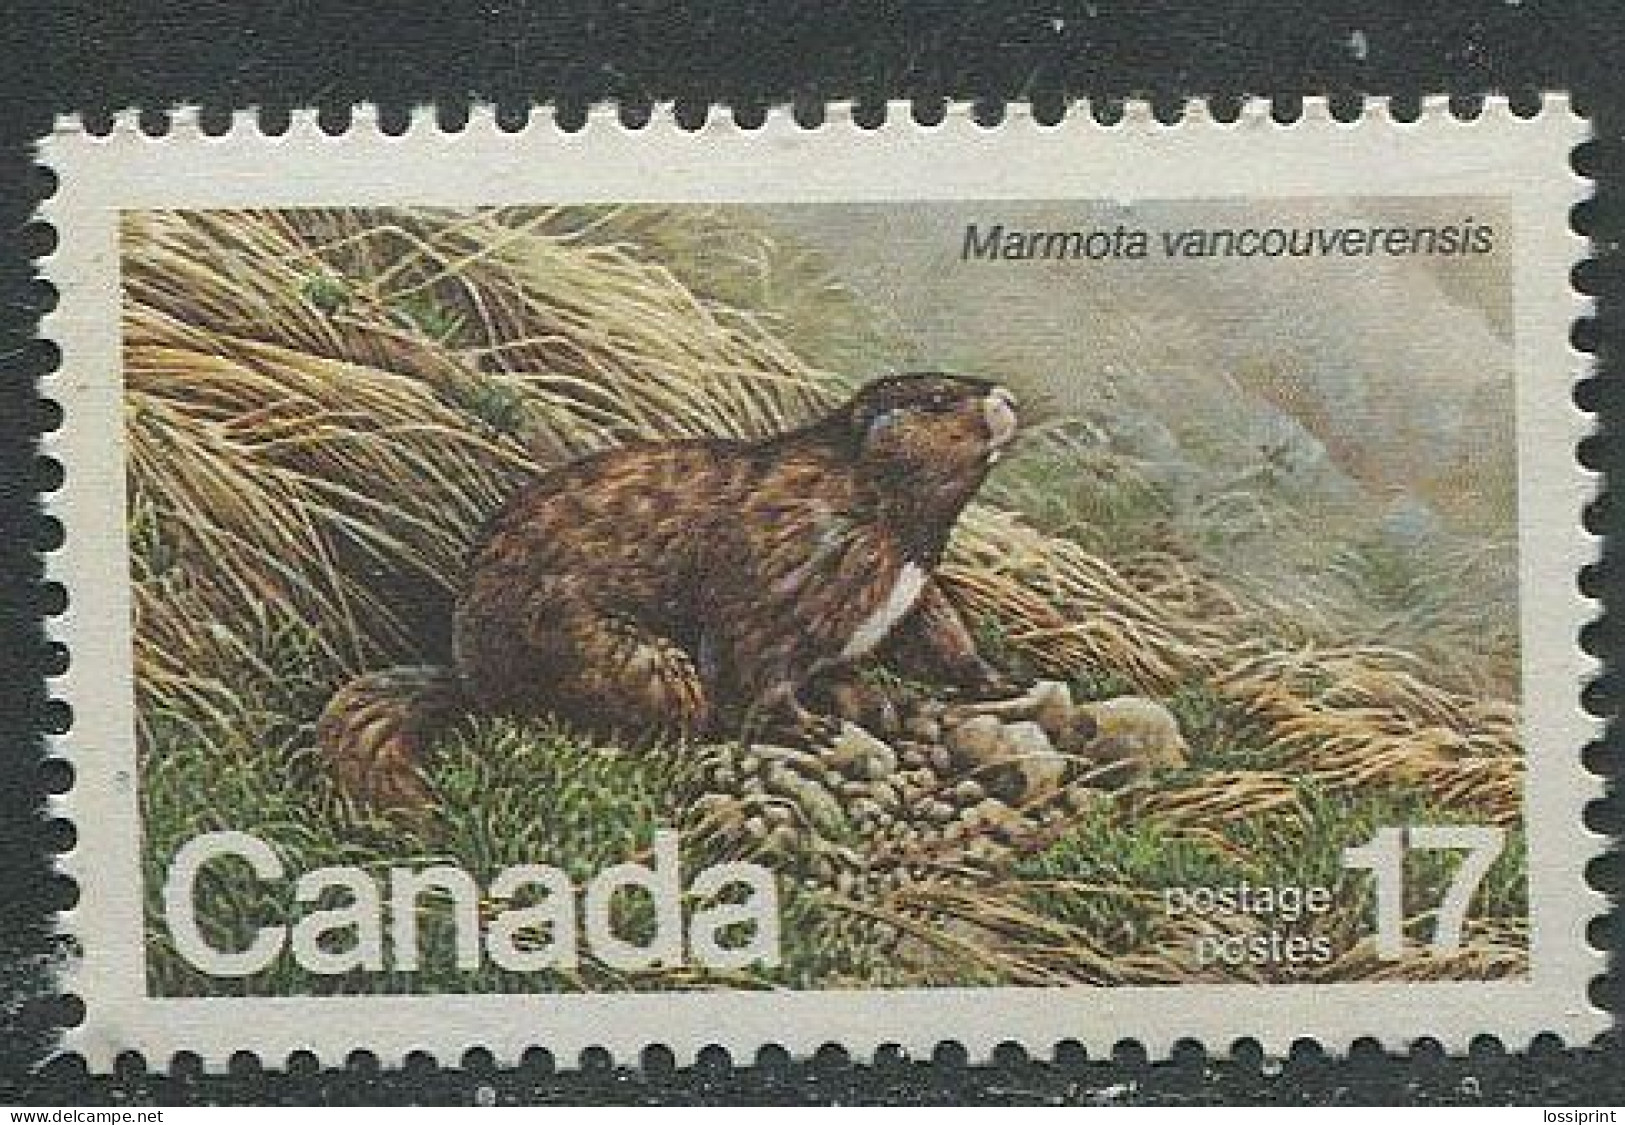 Canada:Unused Stamp Vancouver Island Marmot, 1981, MNH - Roedores